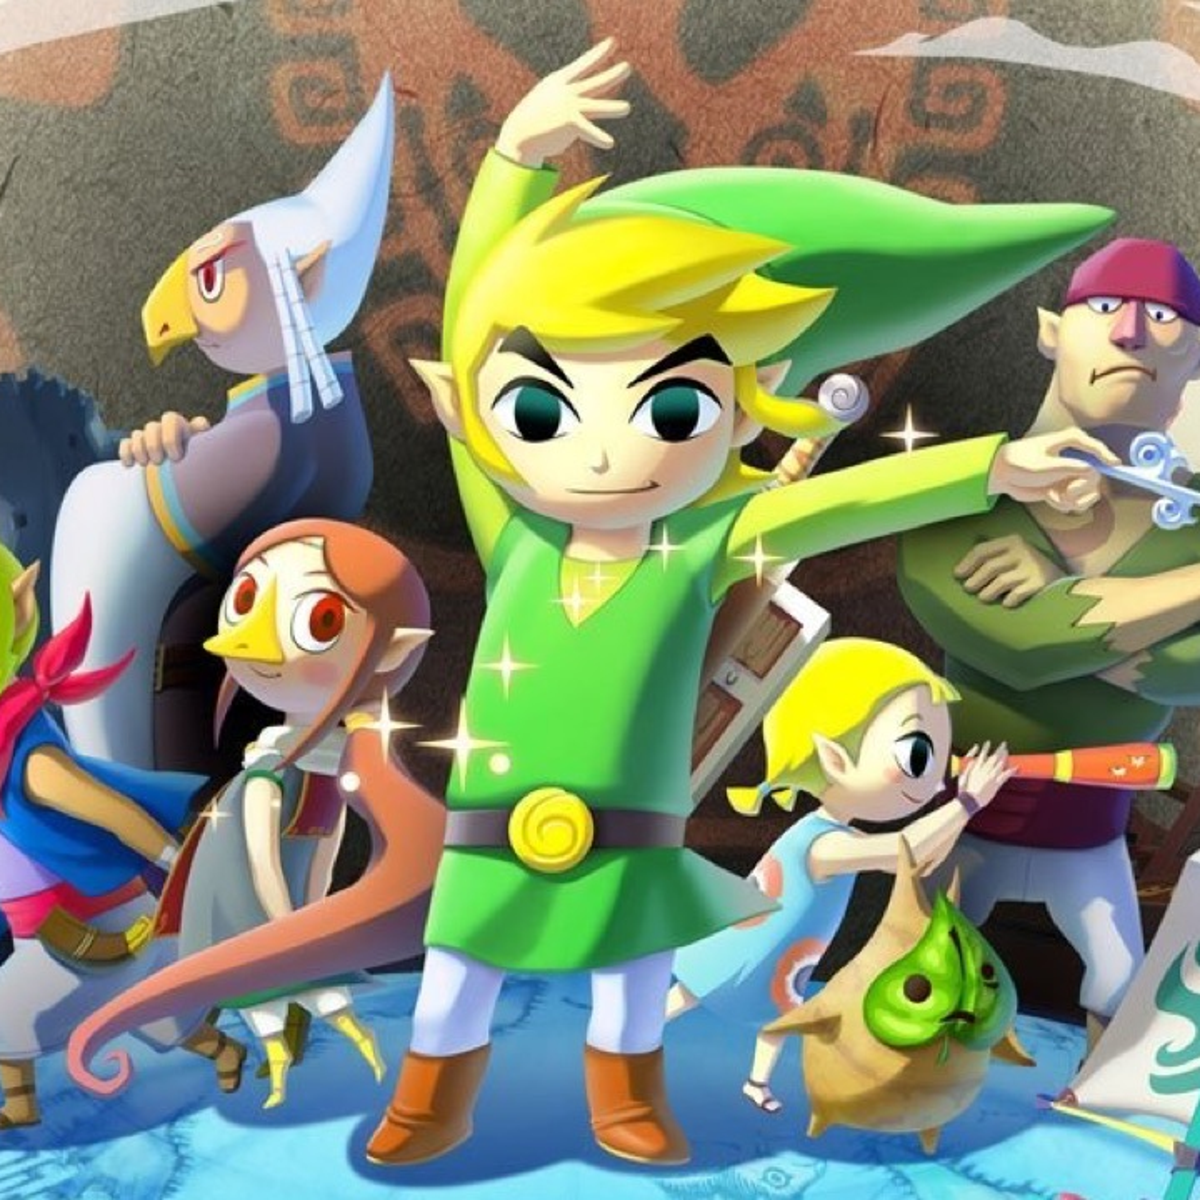 Zelda: Twilight Princess and Wind Waker Switch ports reportedly